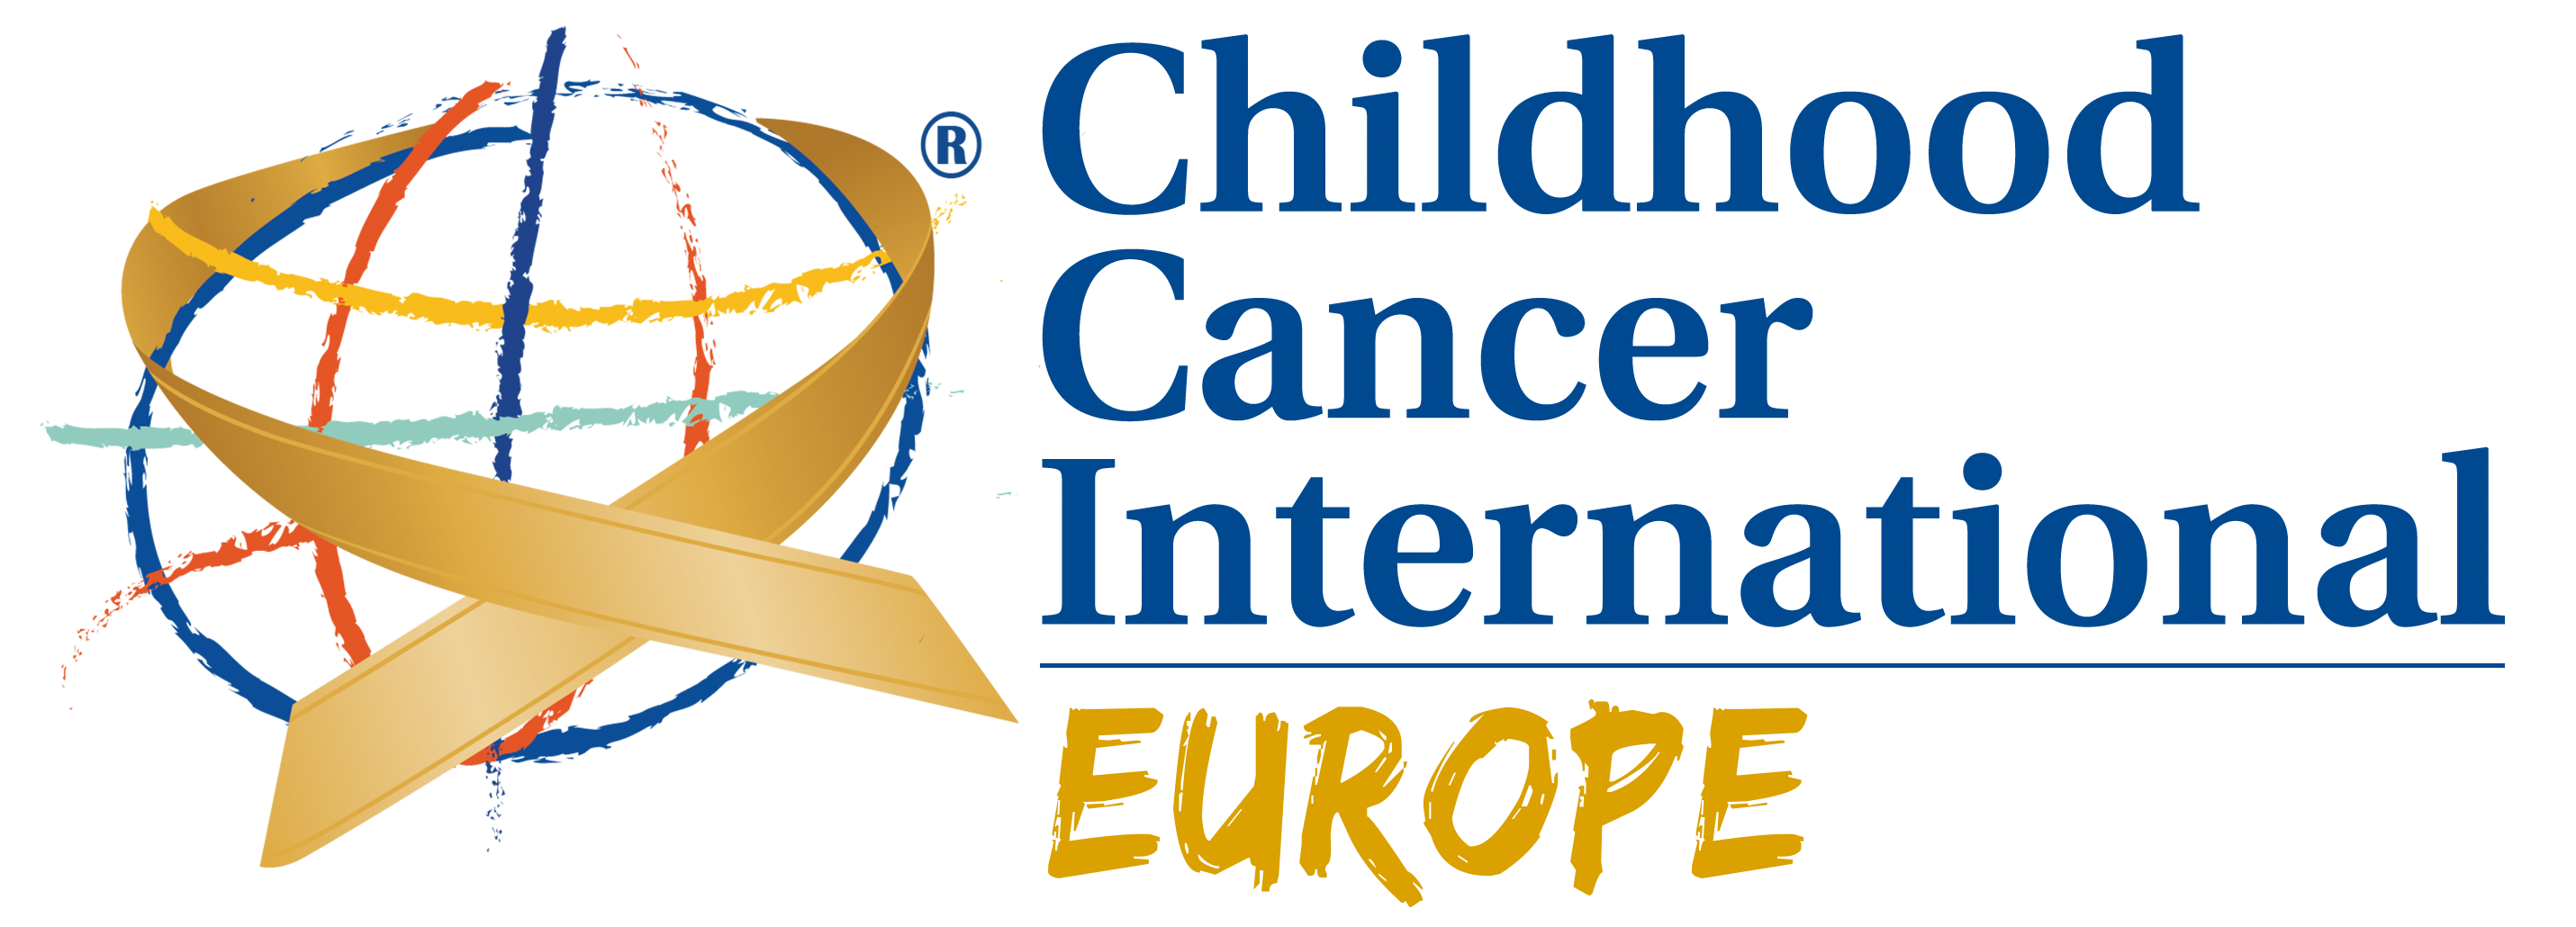 childhood-cancer-international